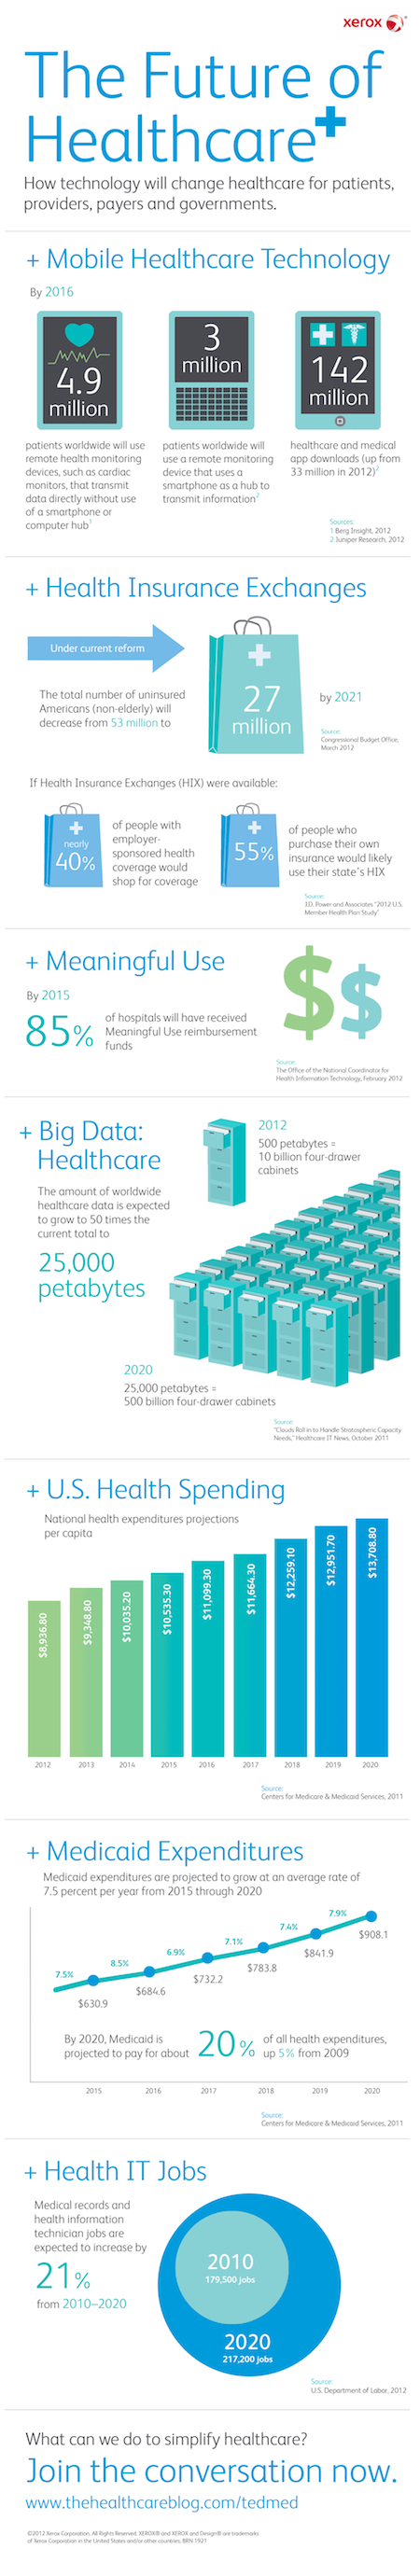 Future of Healthcare infographic